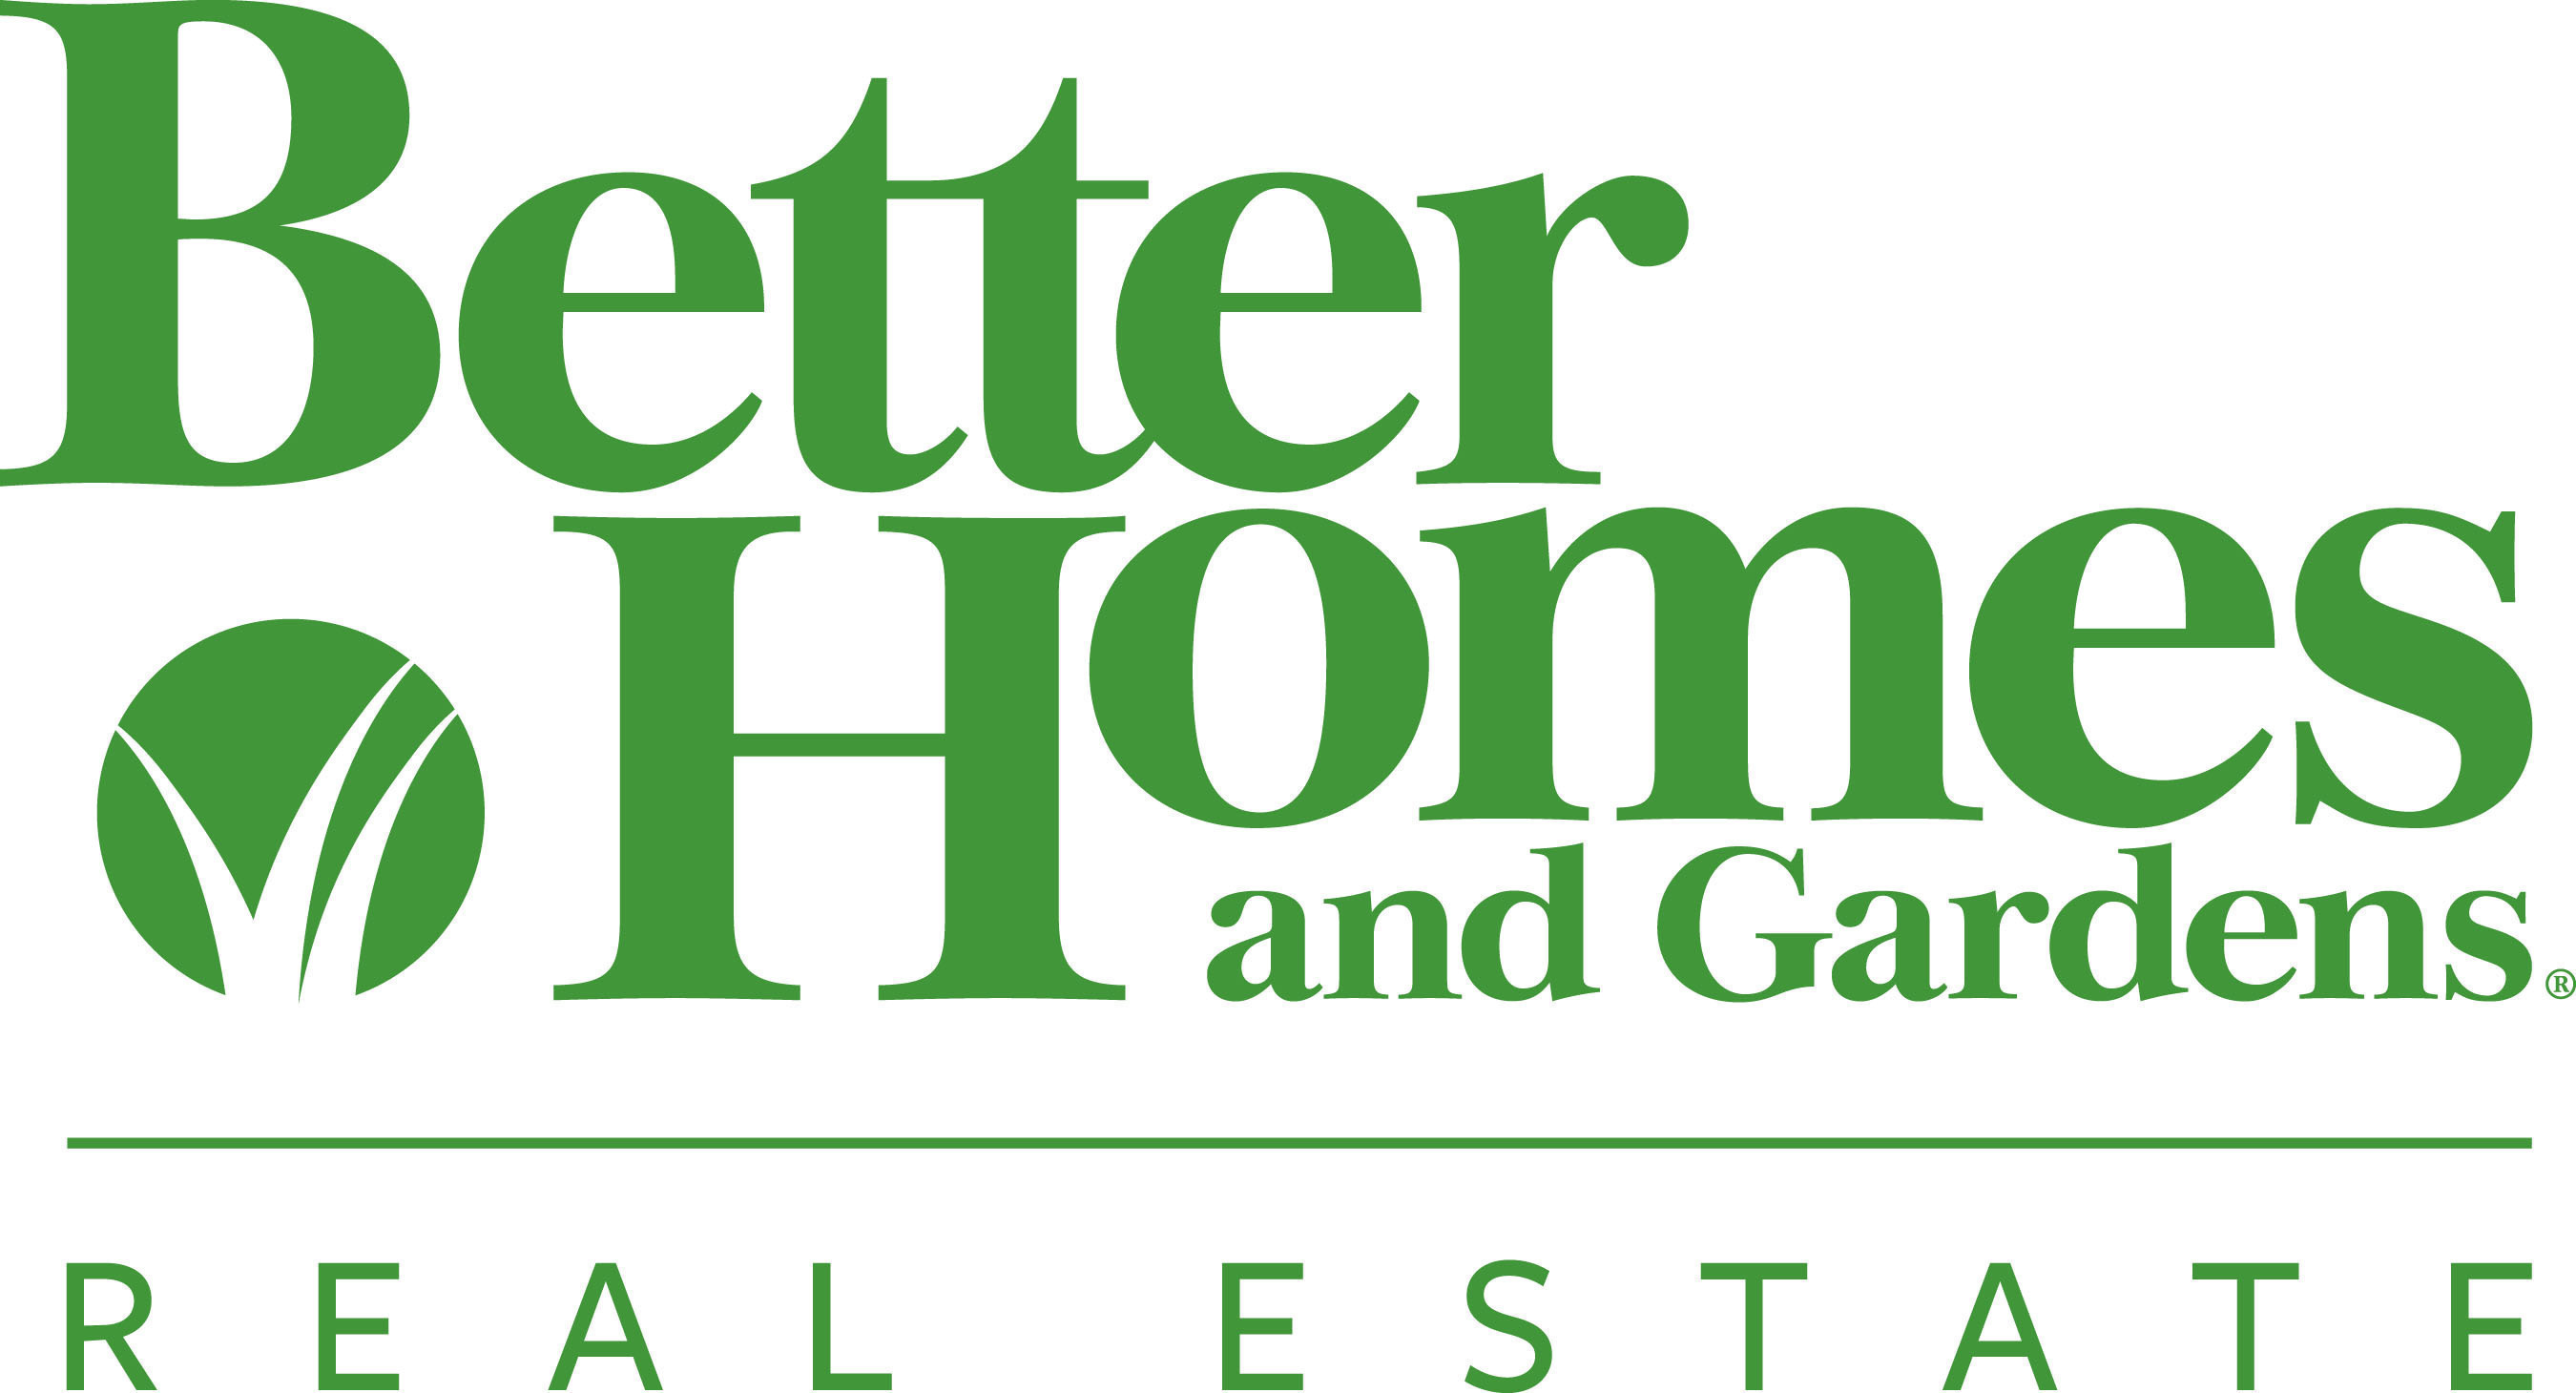 Better Homes and Gardens Real Estate LLC logo. (PRNewsFoto/Better Homes and Gardens Real Estate LLC)